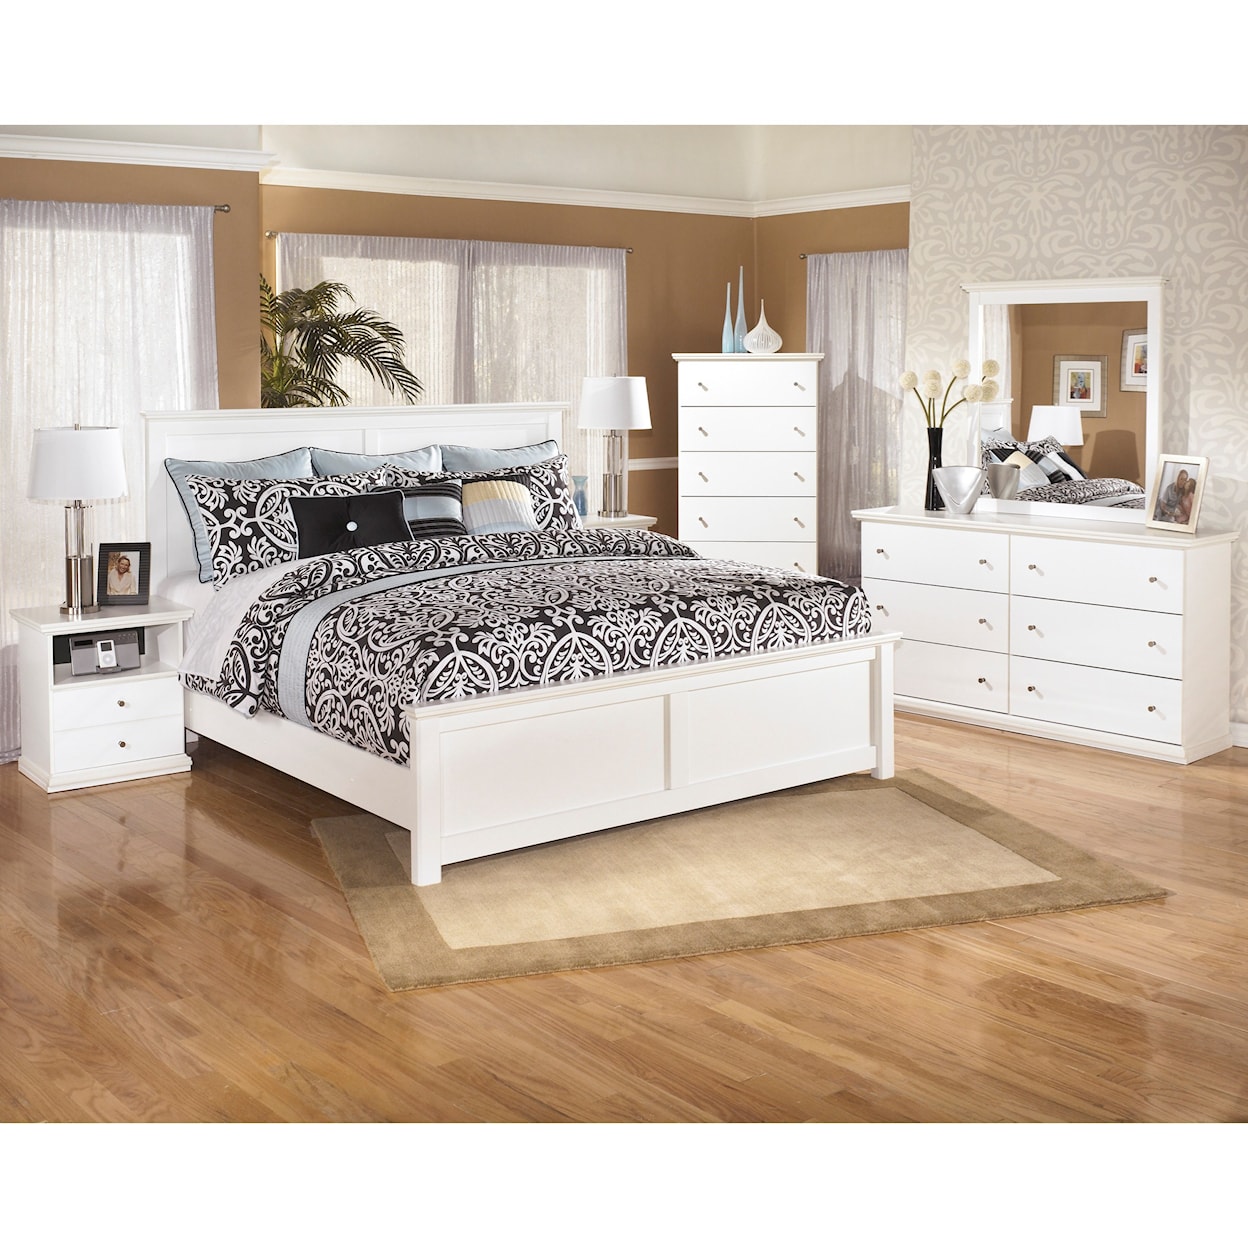 Ashley Furniture Signature Design Bostwick Shoals King Bedroom Group